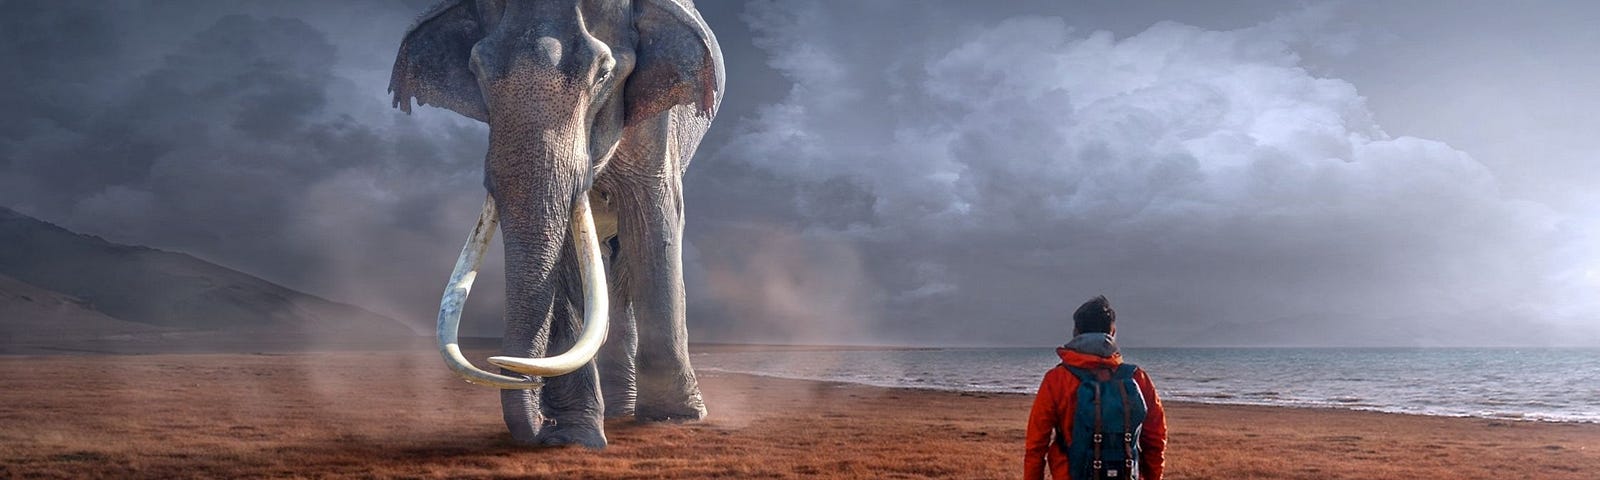 Backpacker approaches a massive elephant